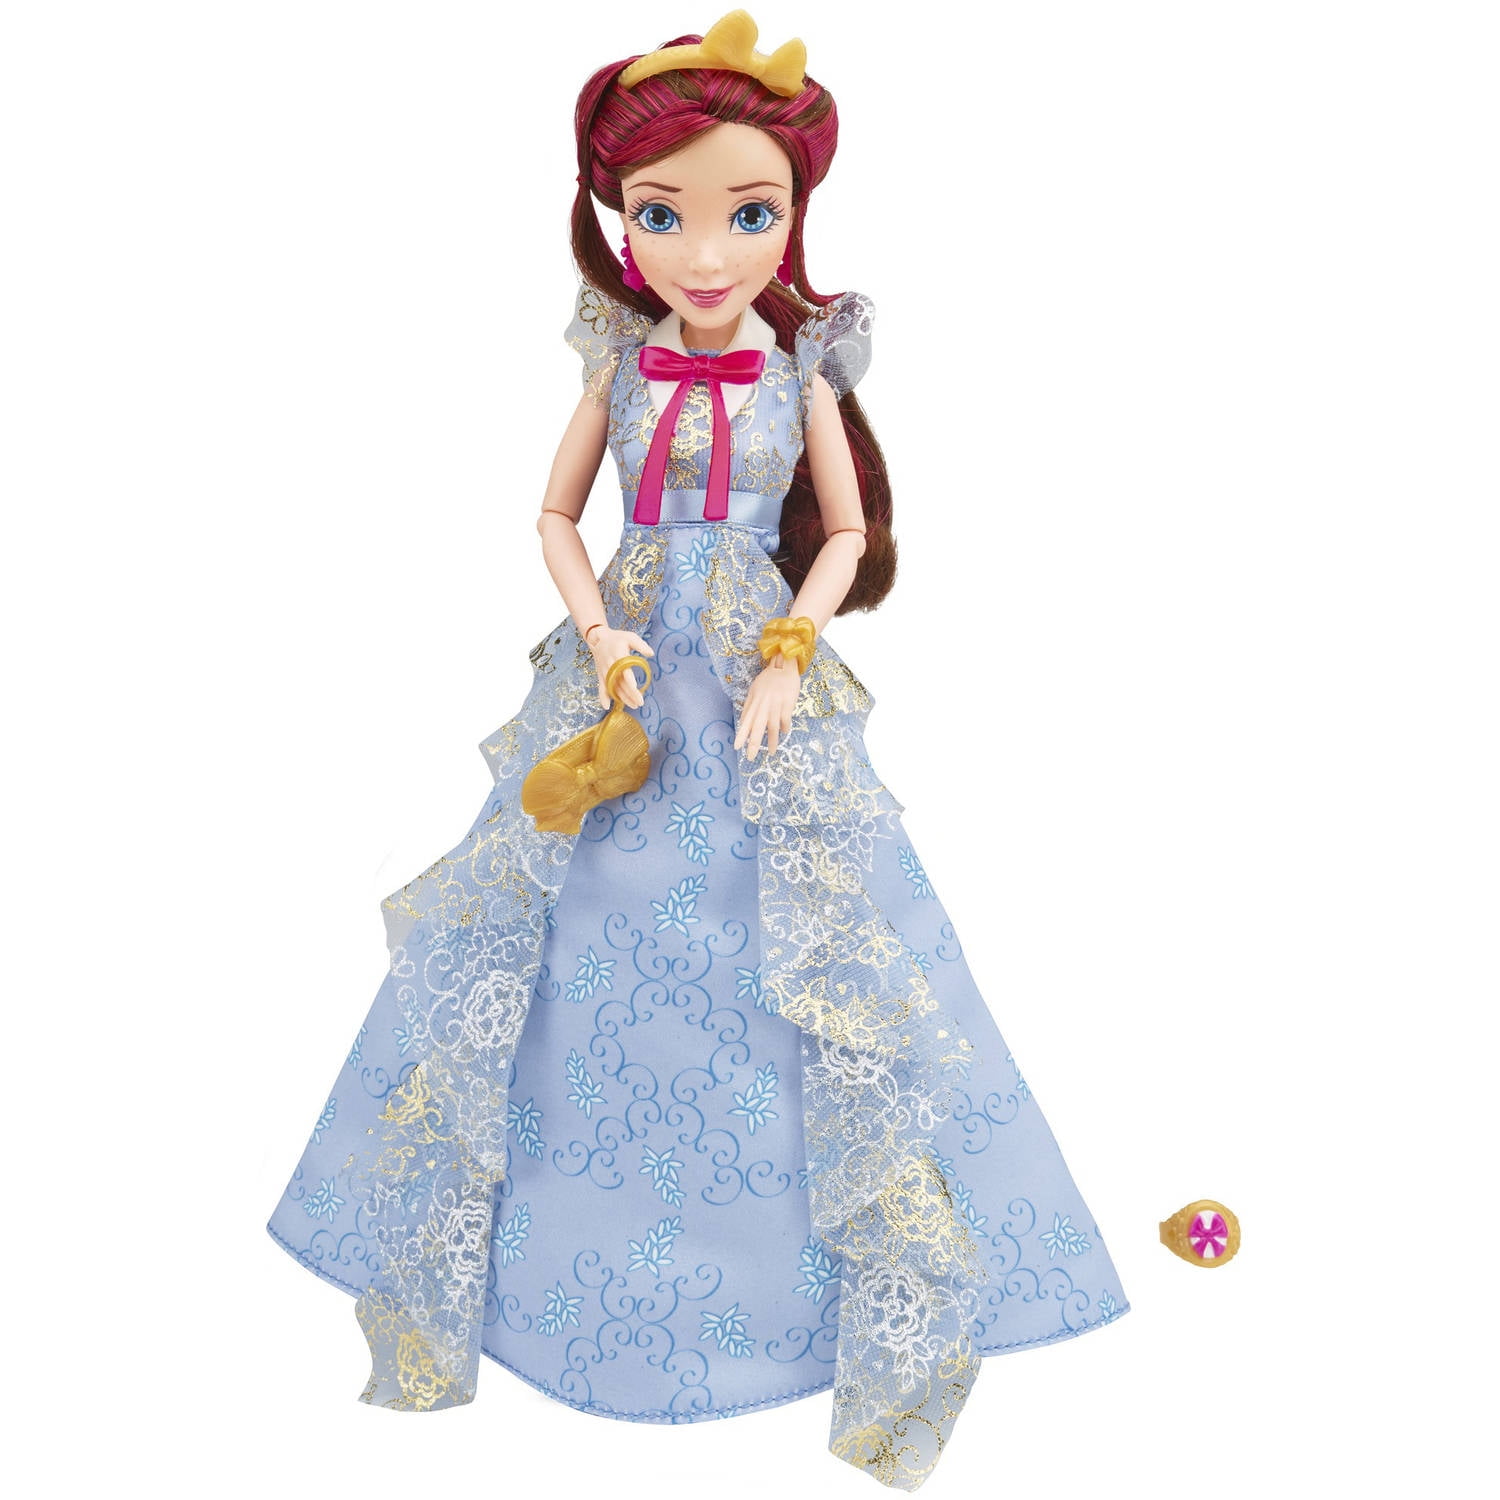 Jamie's Toy Blog: Disney Descendants dolls